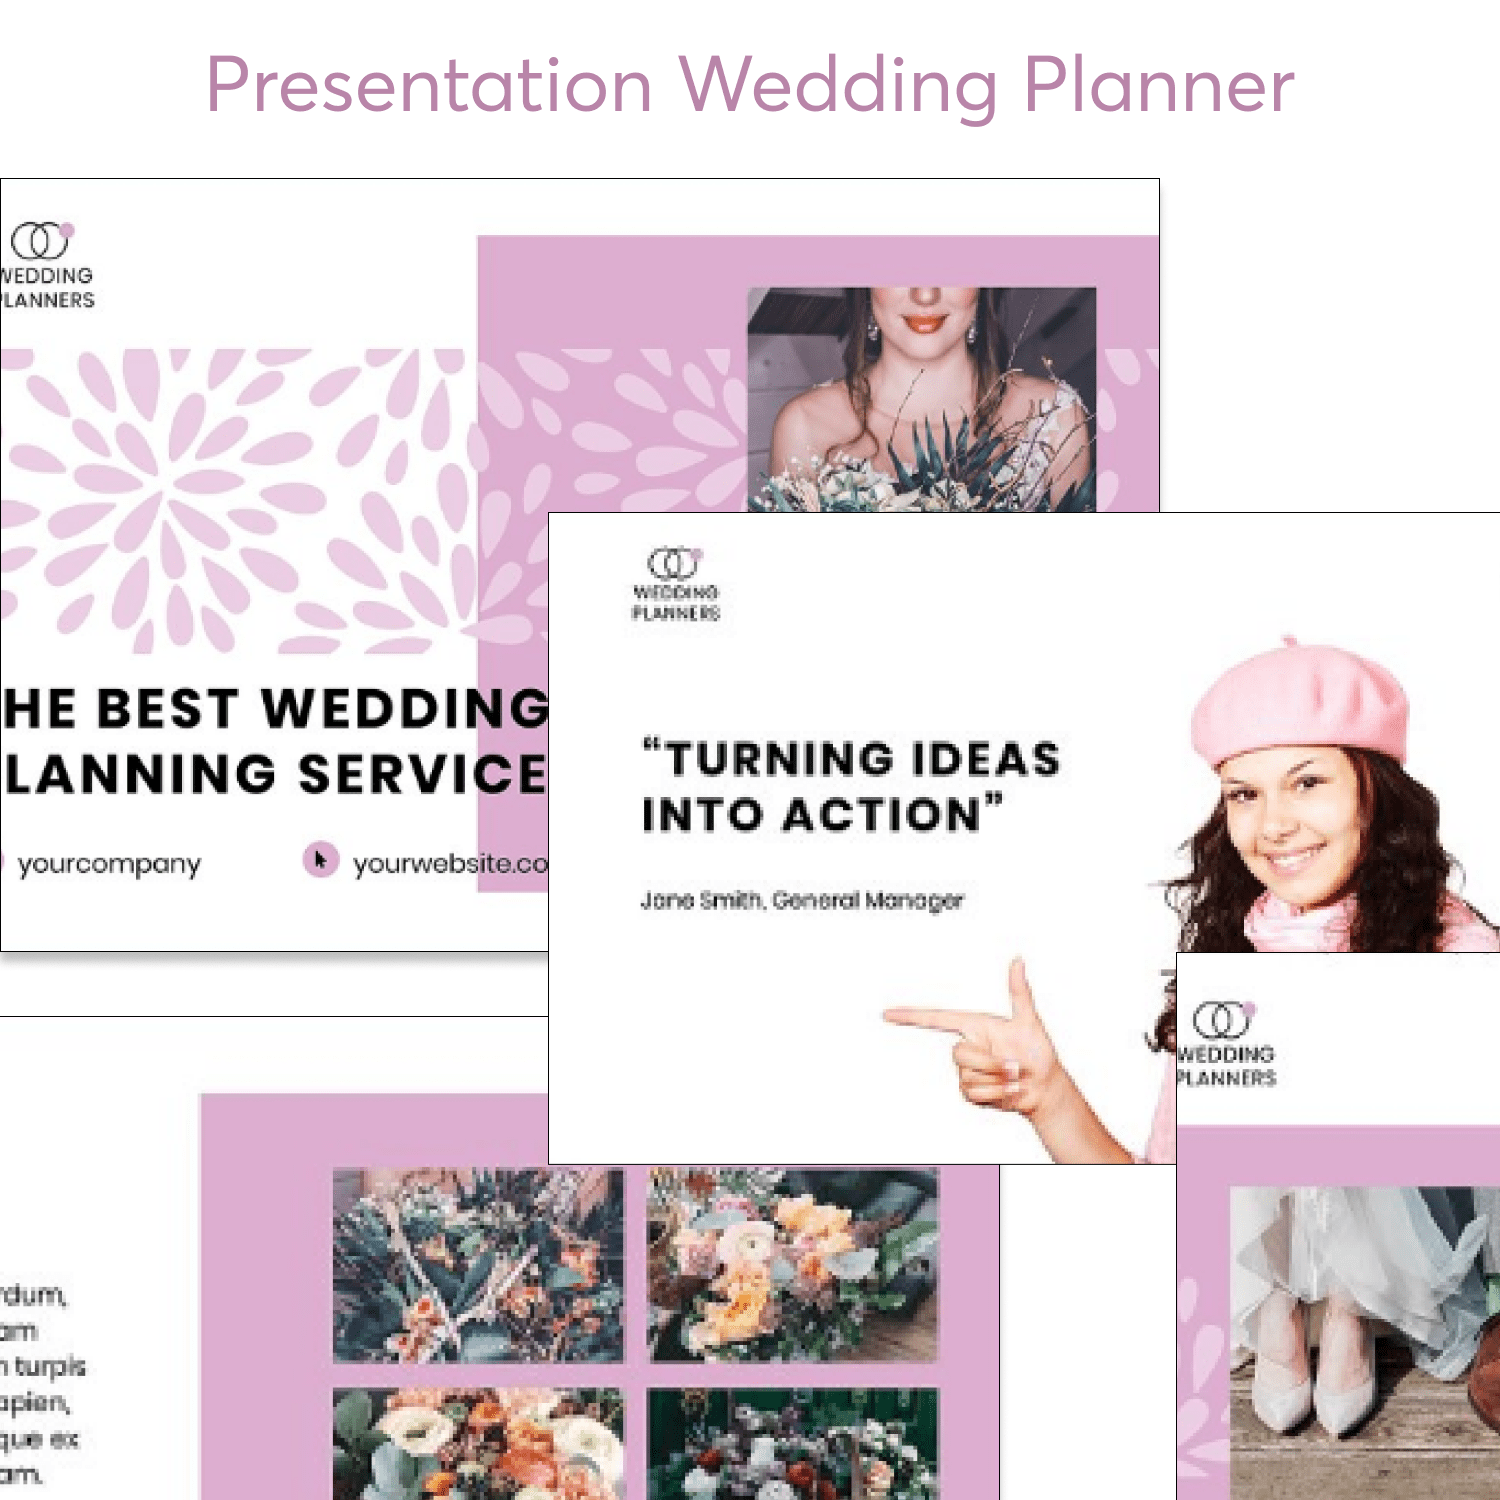 Presentation Wedding Planner cover.